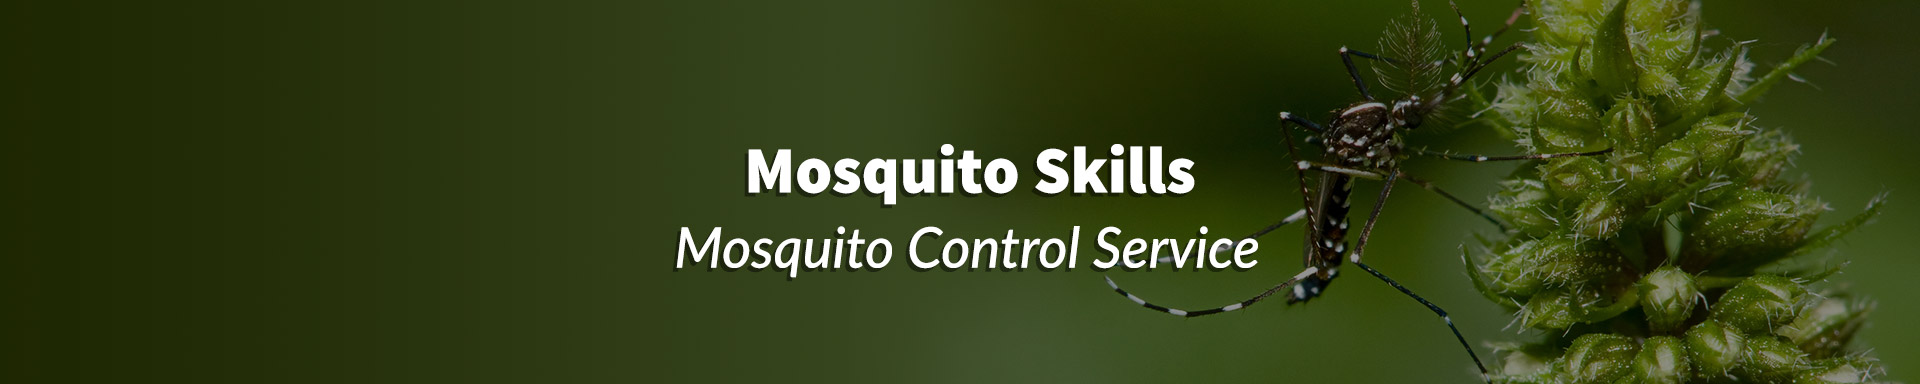 mosquito control header